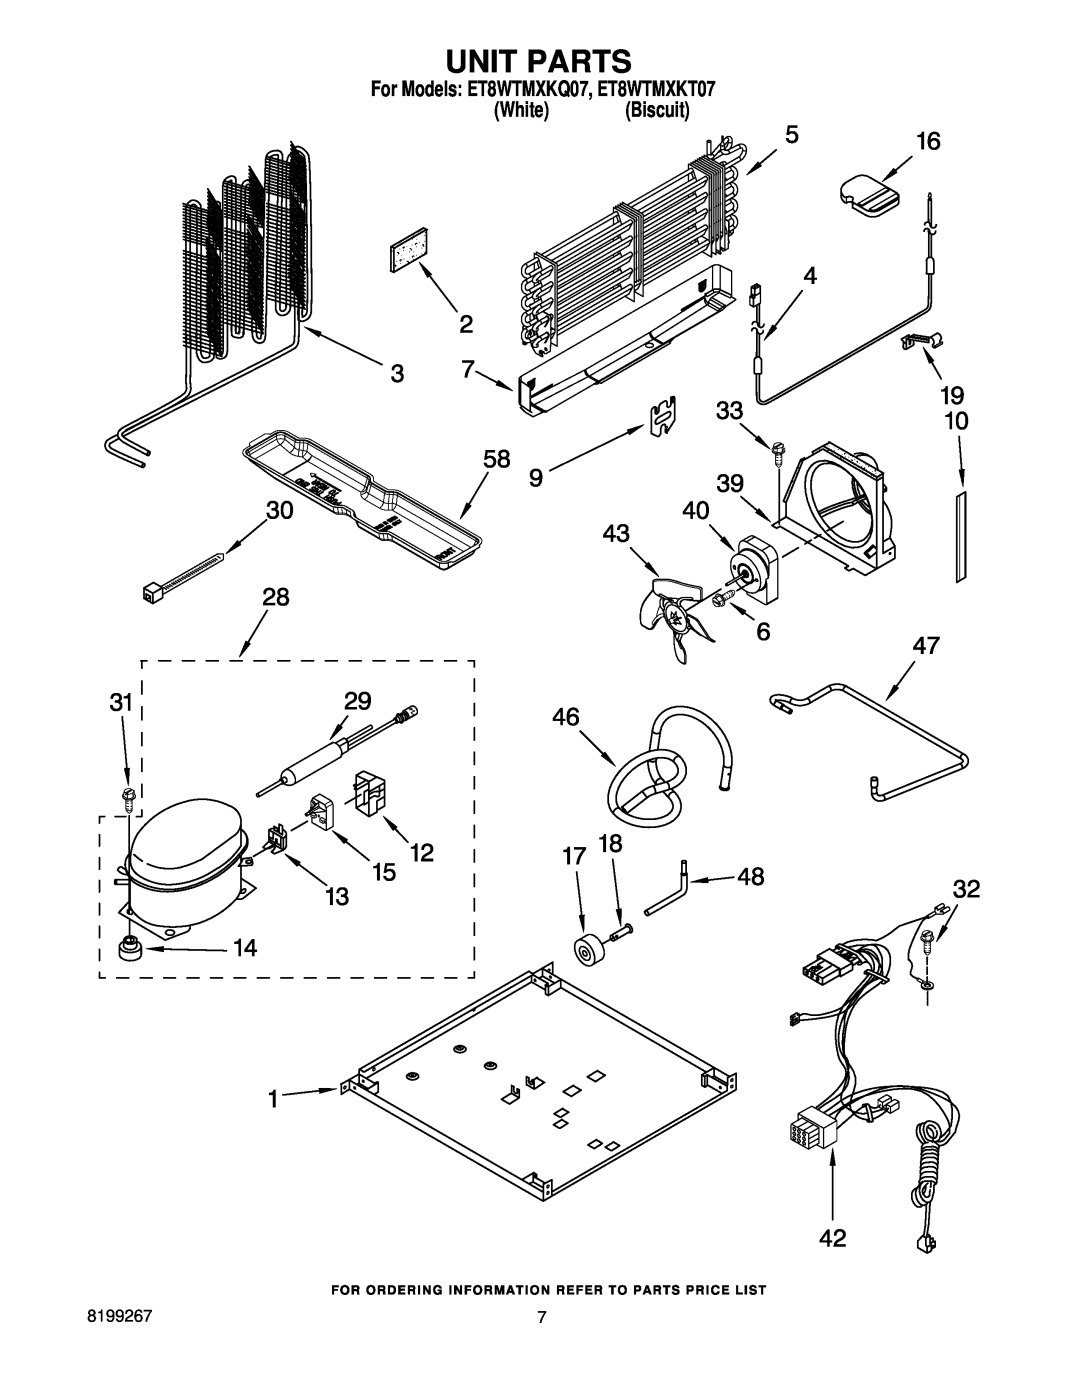 Whirlpool manual Unit Parts, For Models ET8WTMXKQ07, ET8WTMXKT07, White Biscuit 